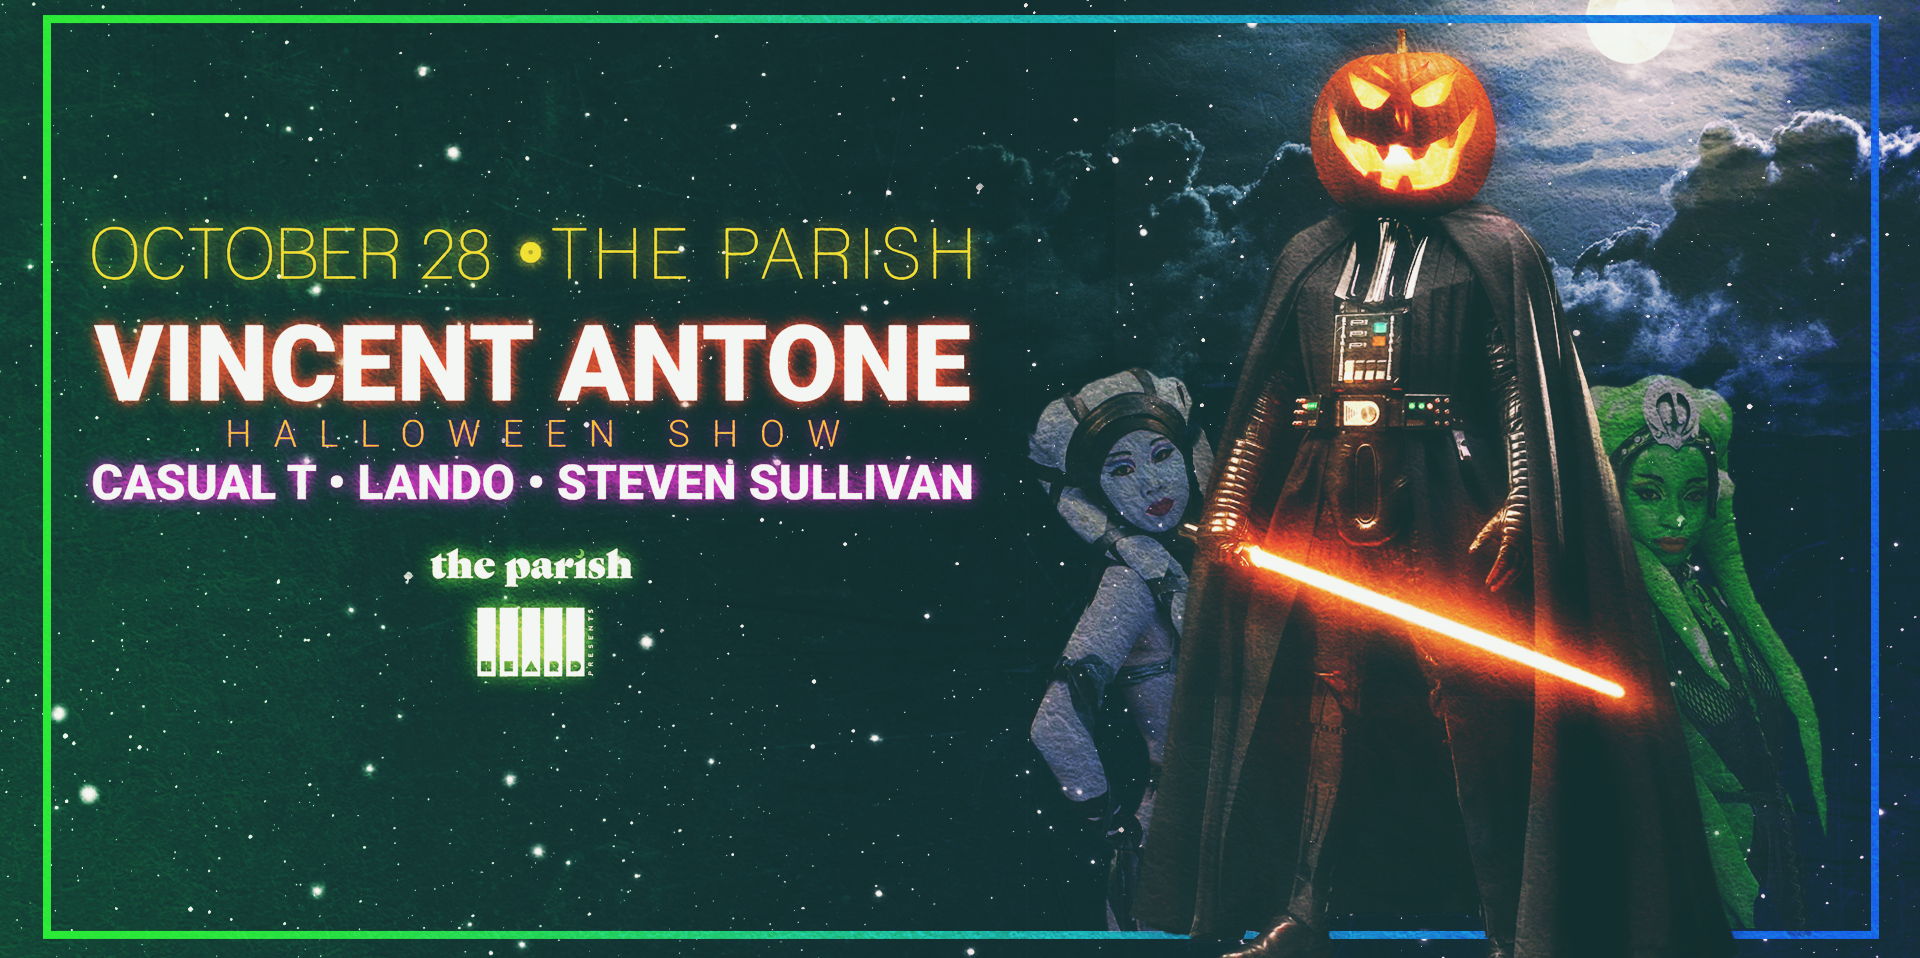 Vincent Antone w/ Causal T, Lando, and Steven Sullivan (Halloween Show)at the Parish 10/28 promotional image